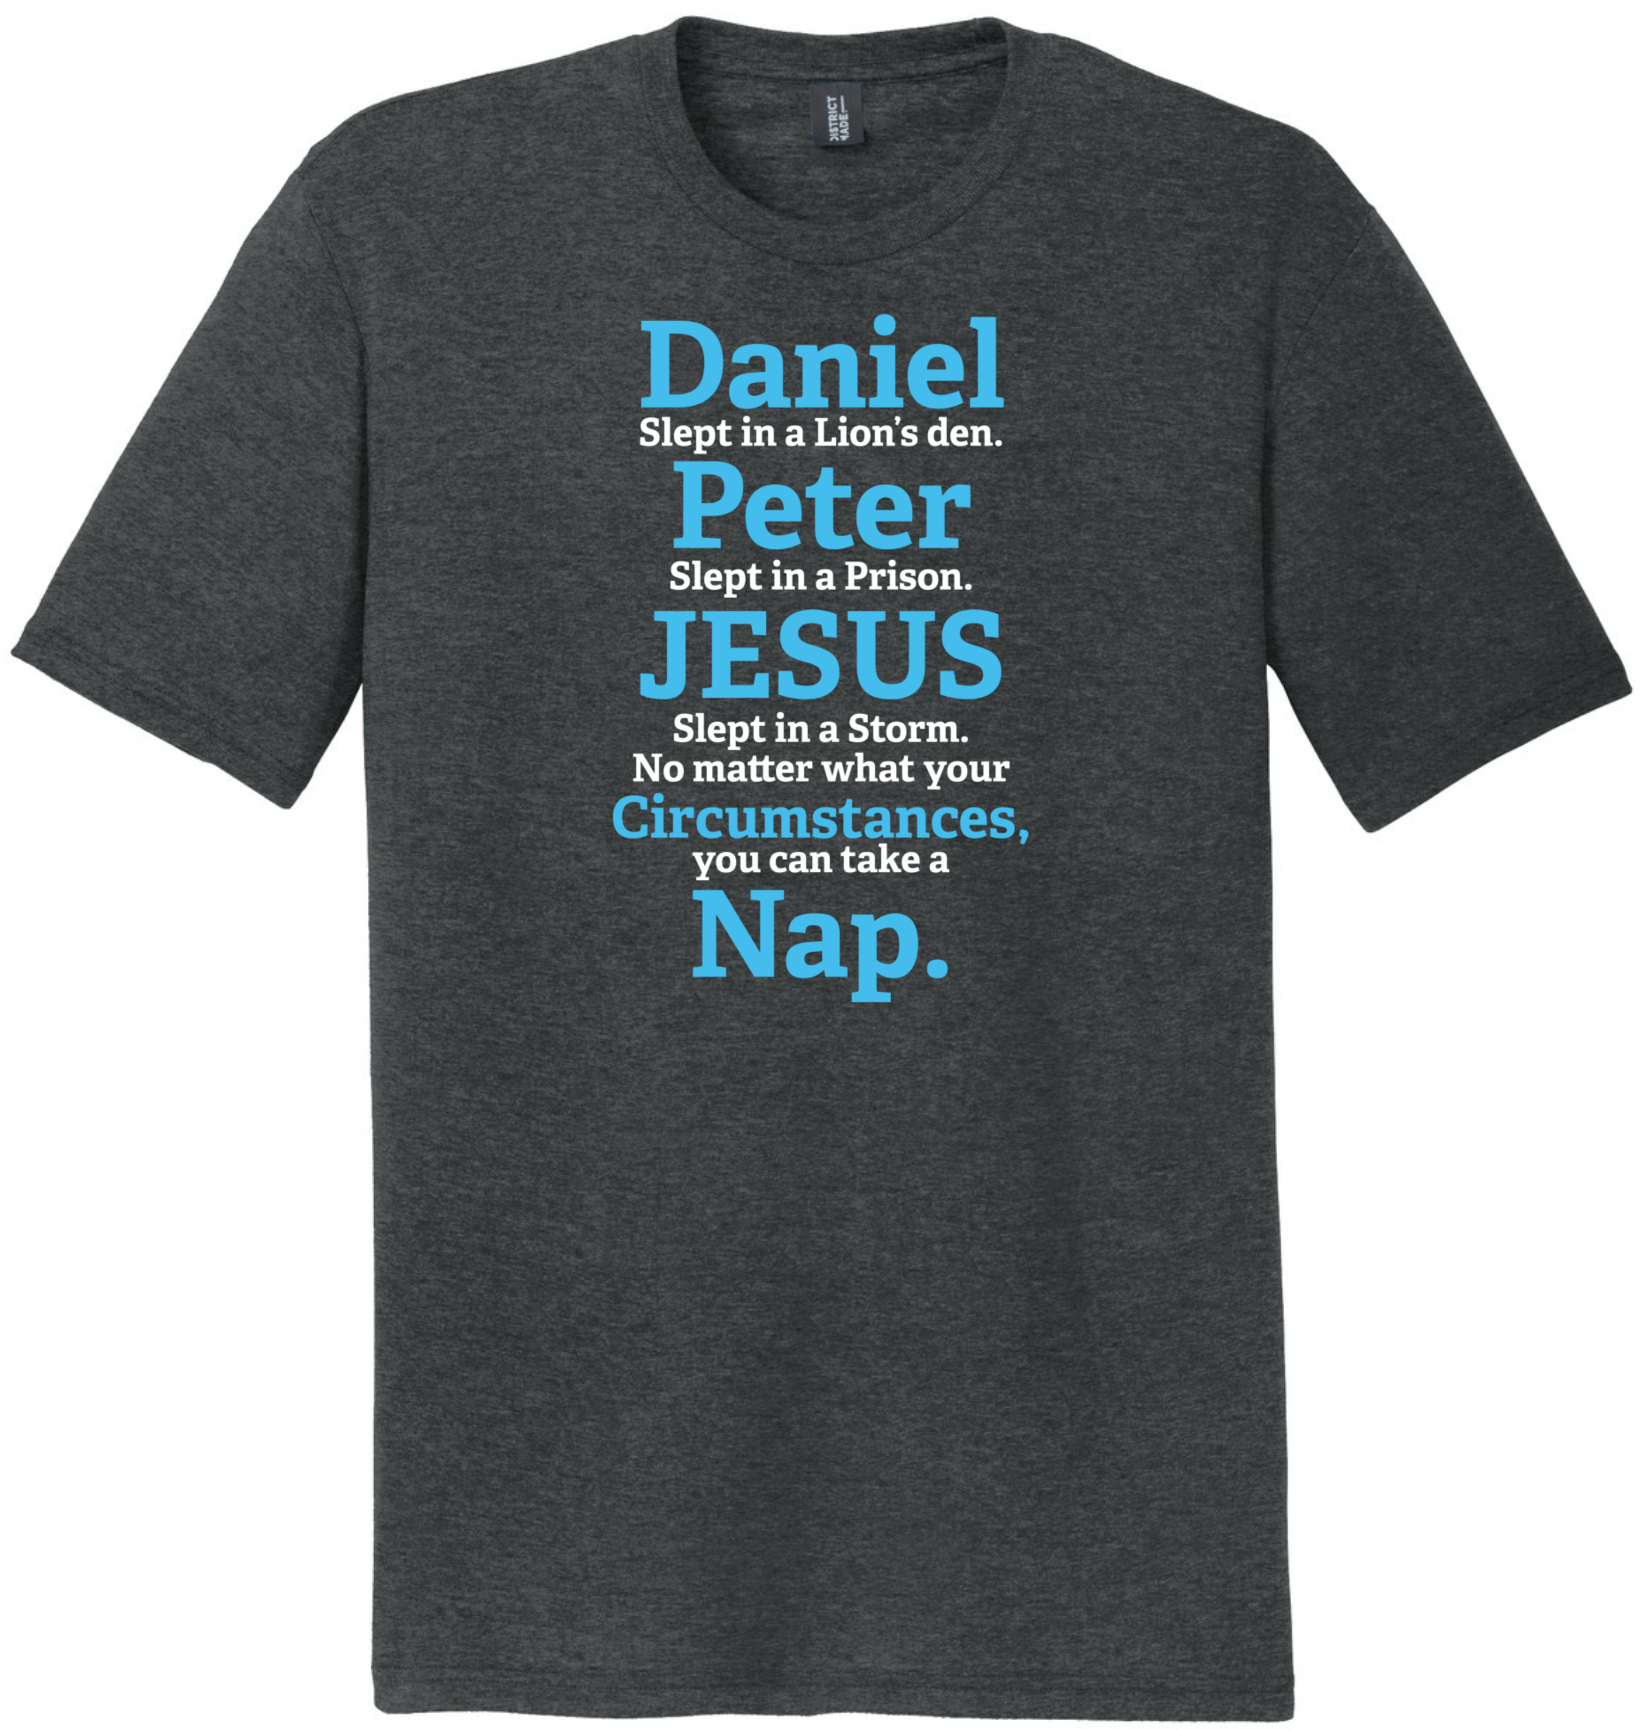 Daniel, Peter and Jesus took Naps